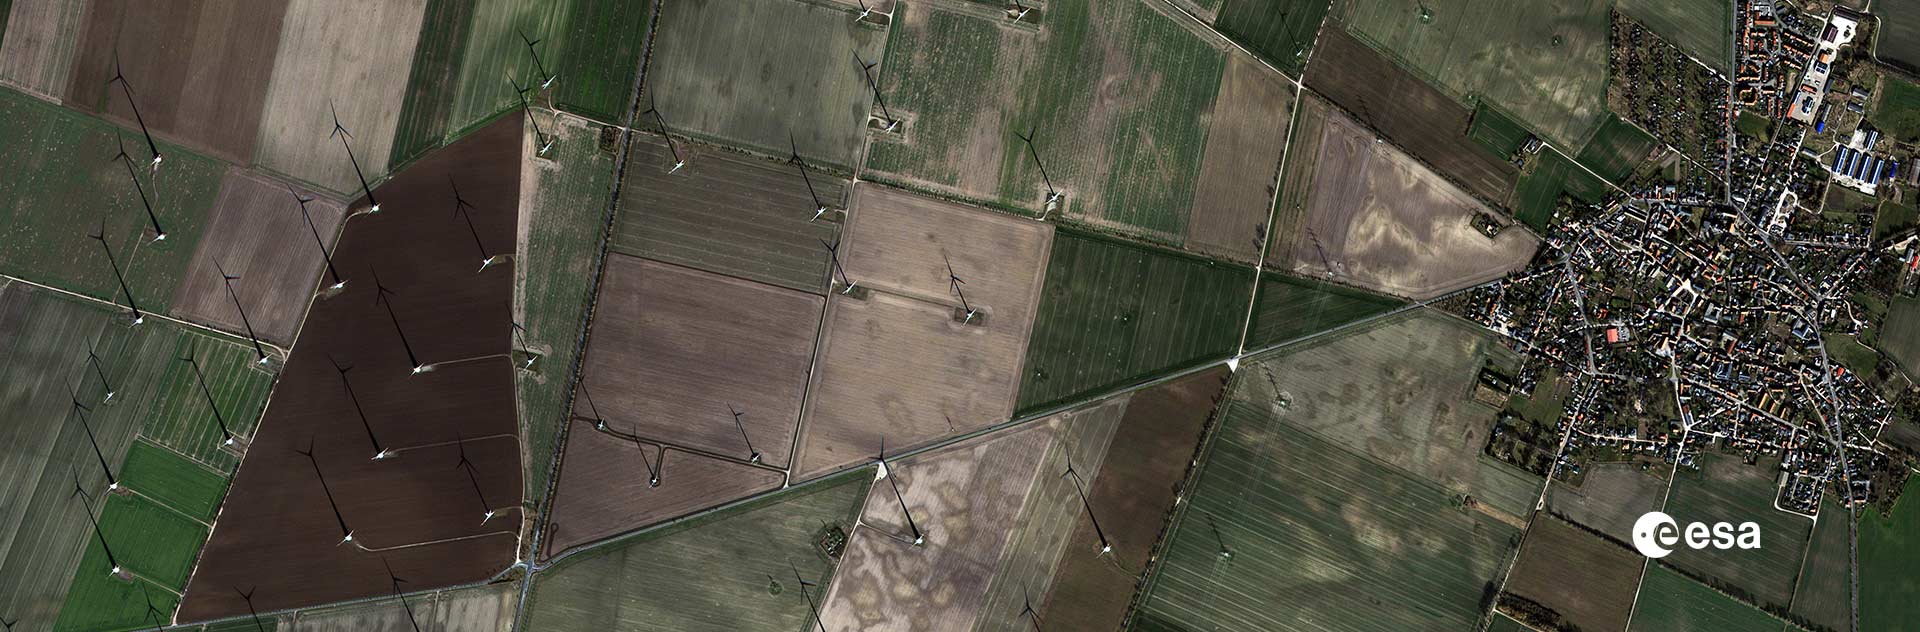 Vision-1 satellite image of windfarms in Bördeland, Germany.